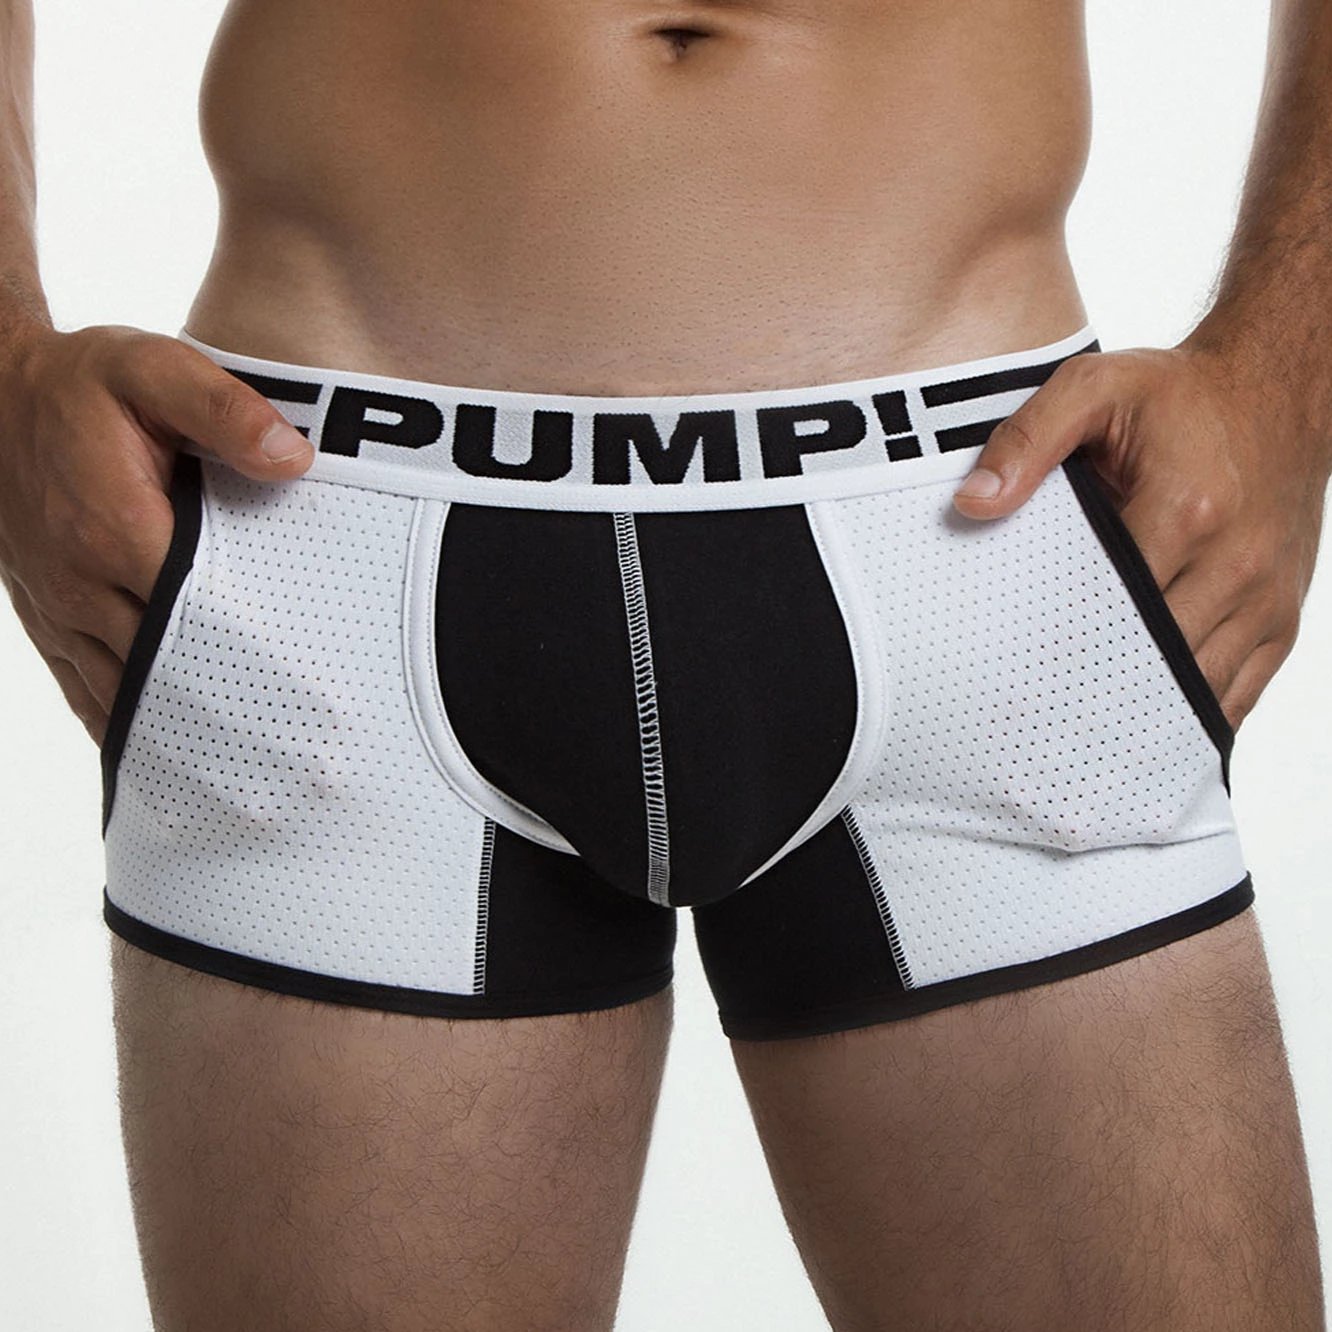 Drop-Kick Jogger Front by PUMP! Underwear at Trenderwear.com